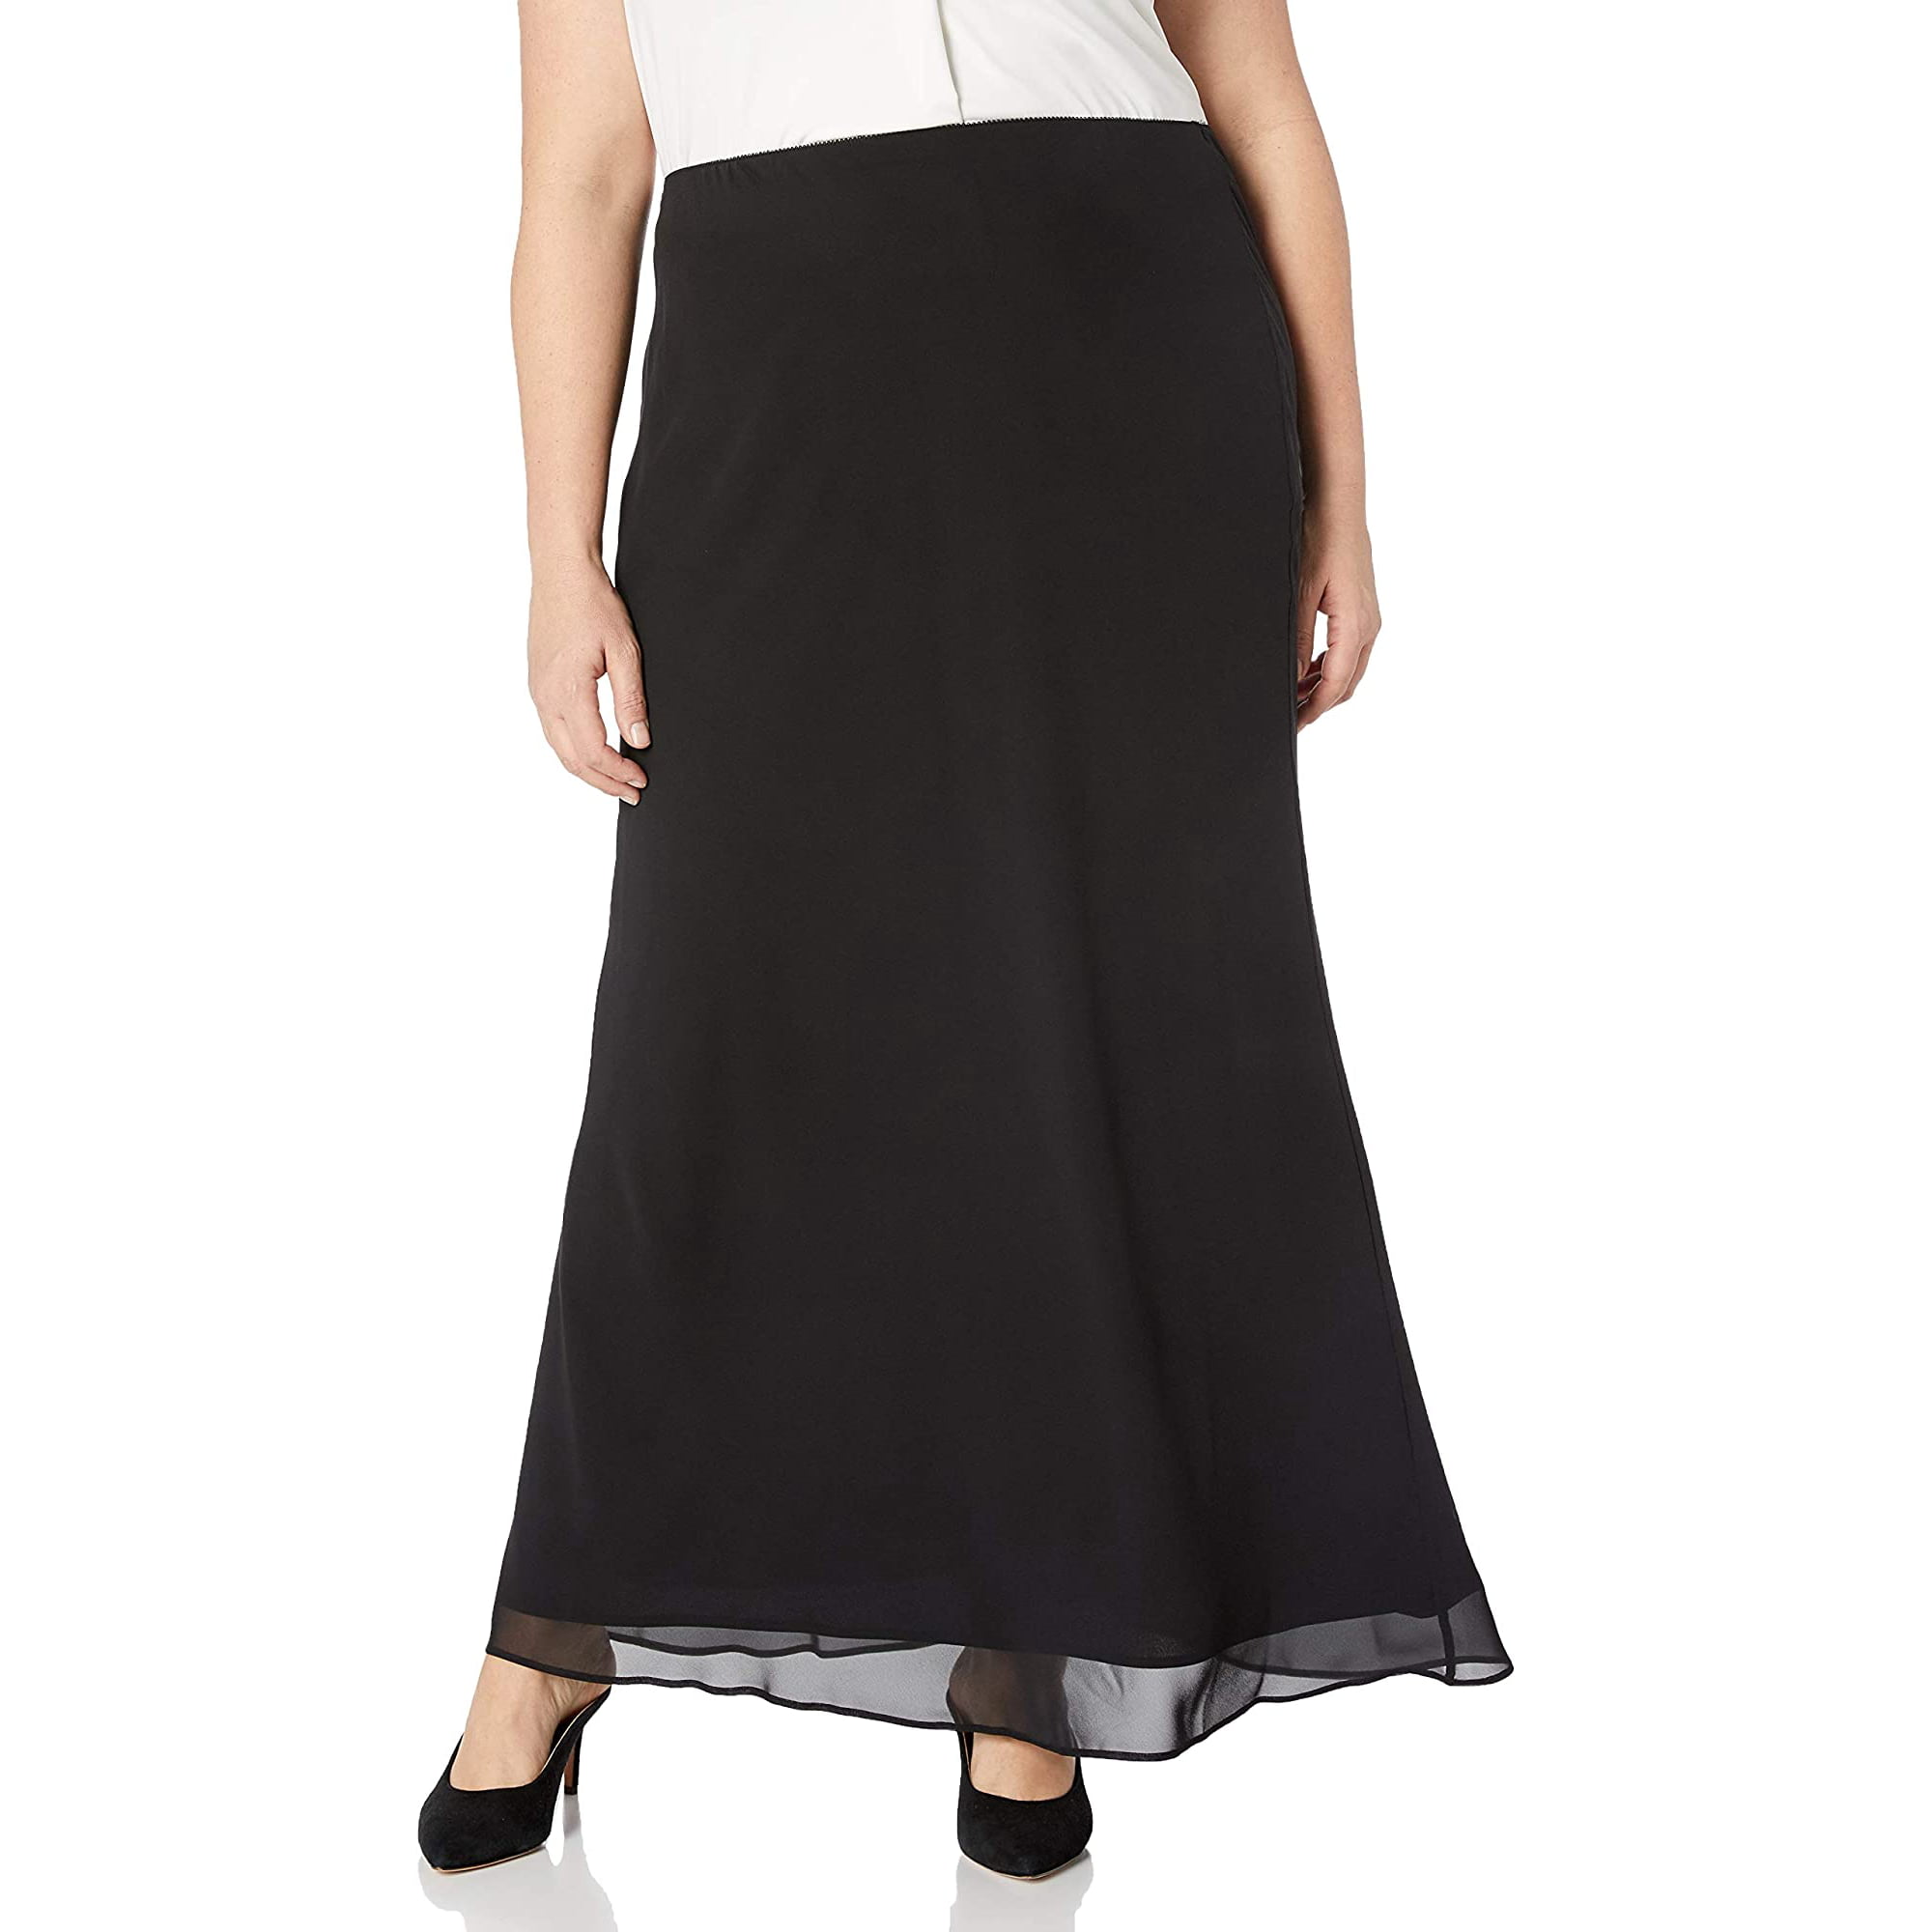 Alex Evenings A-Line Dress Skirt Petite Regular Plus Sizes | Walmart Canada